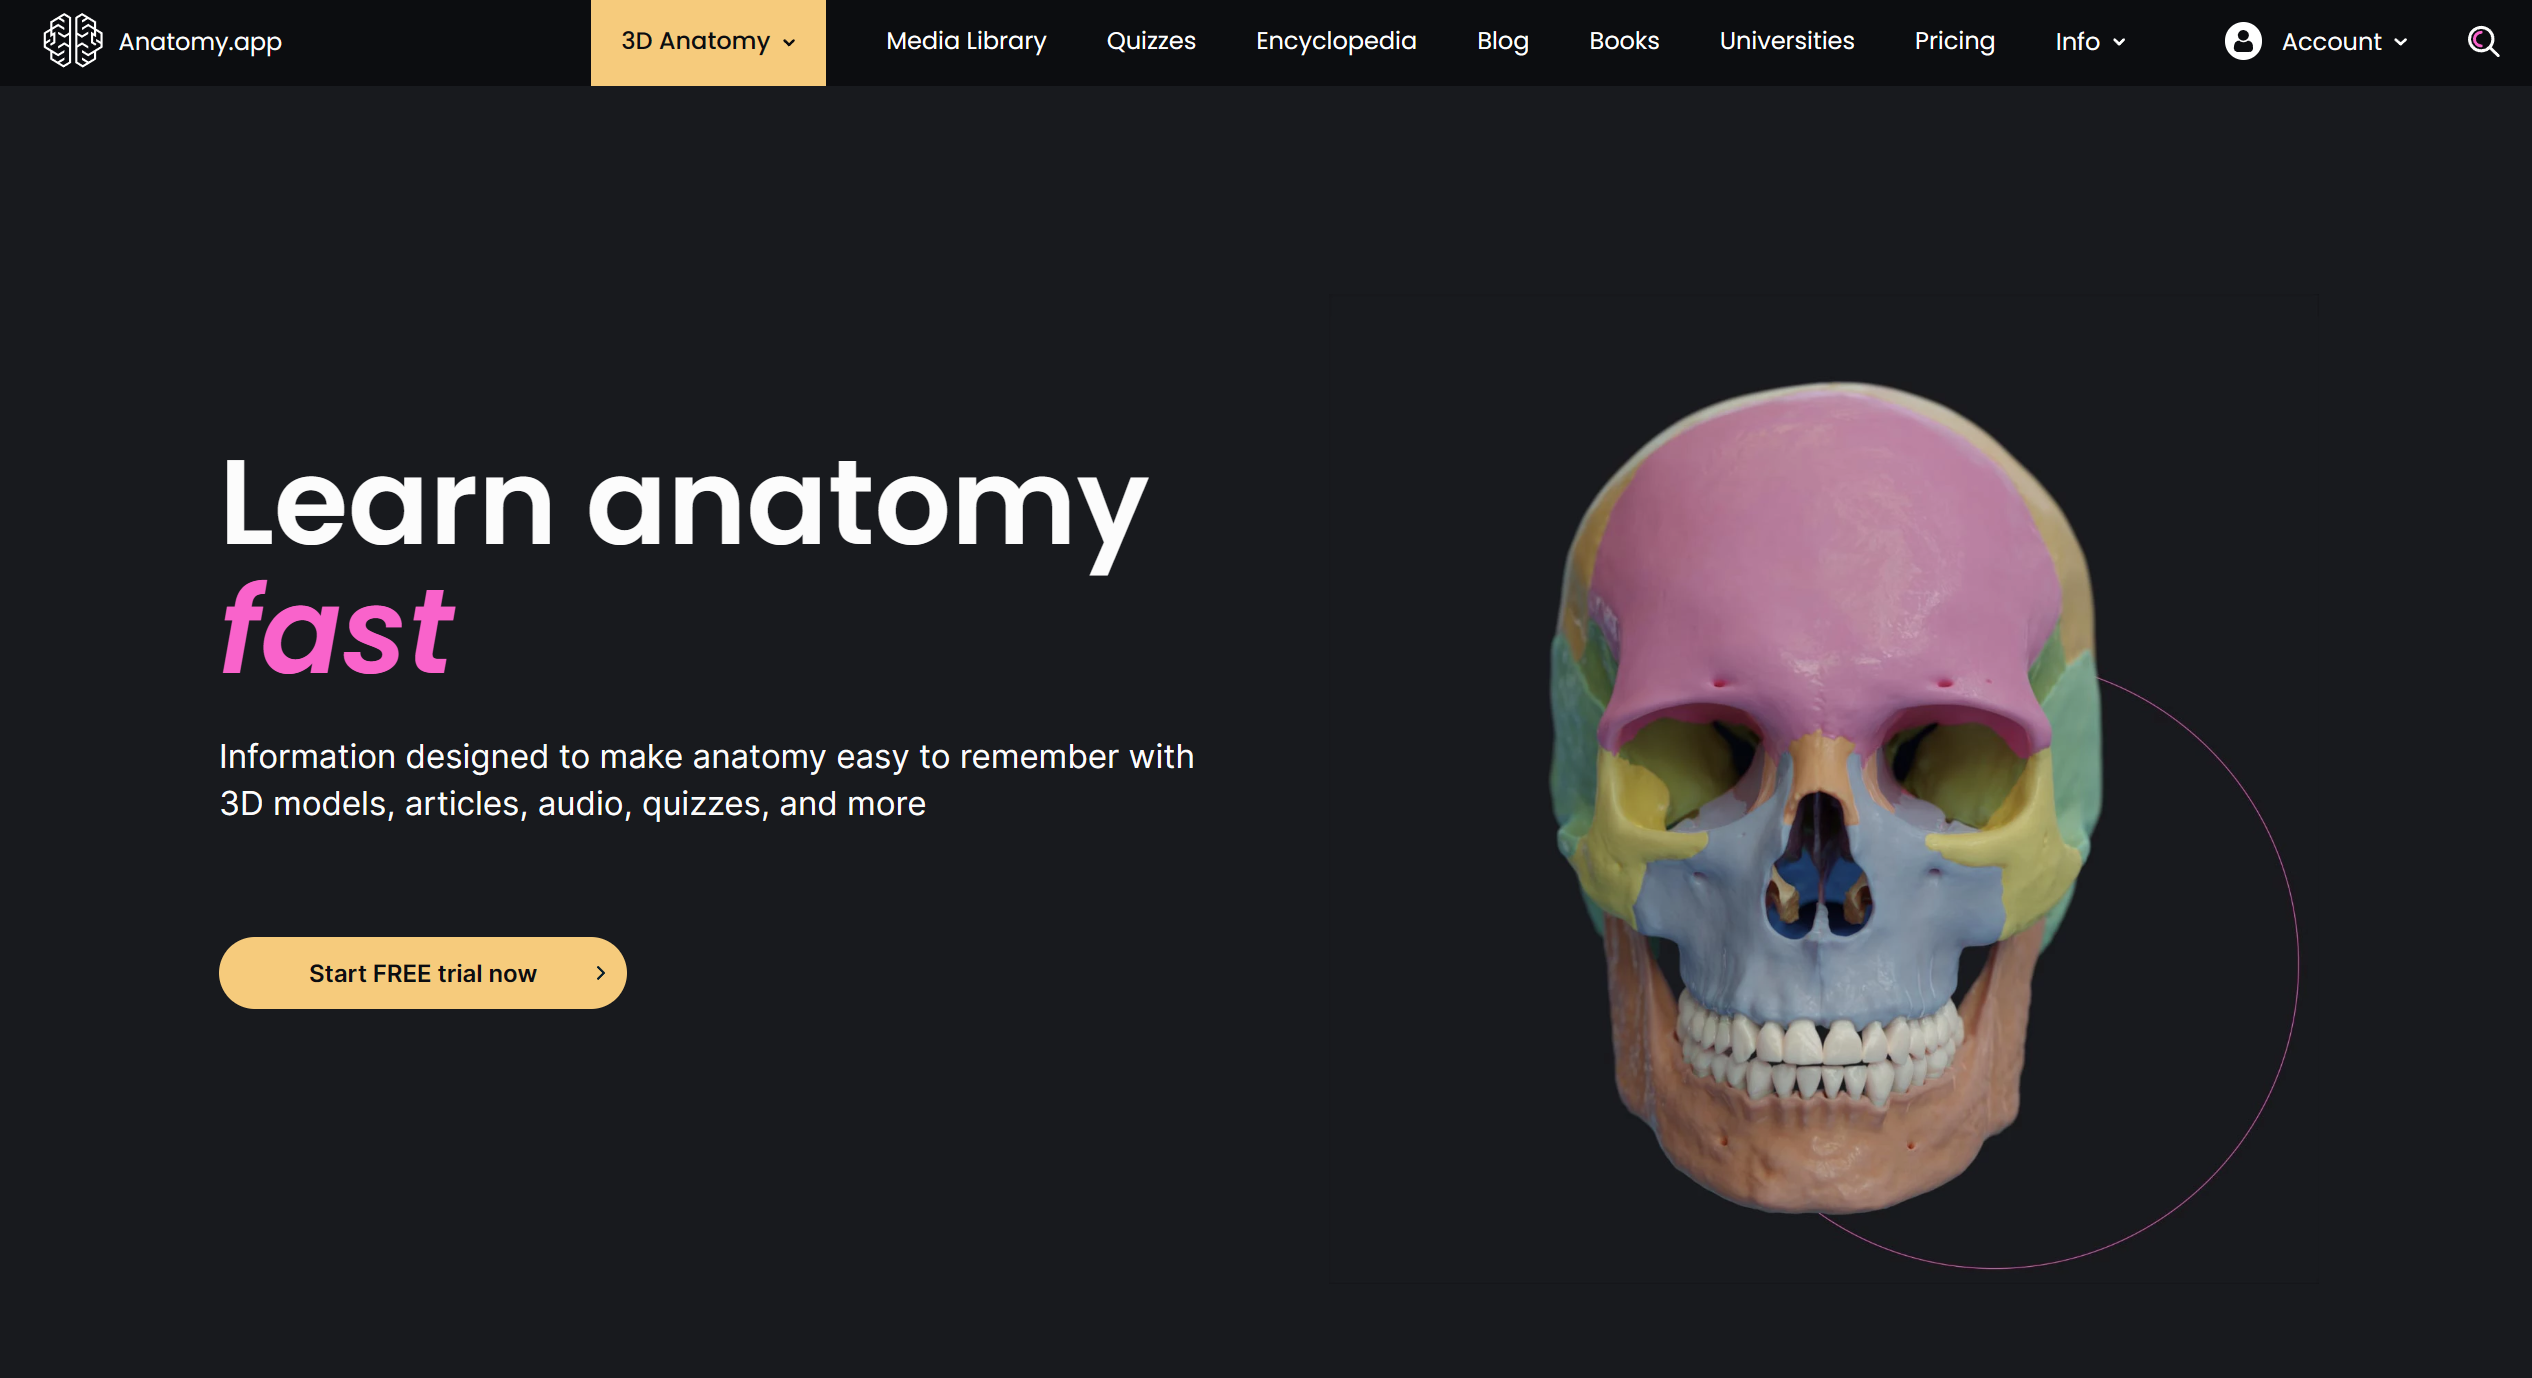 Anatomy.app Landing page